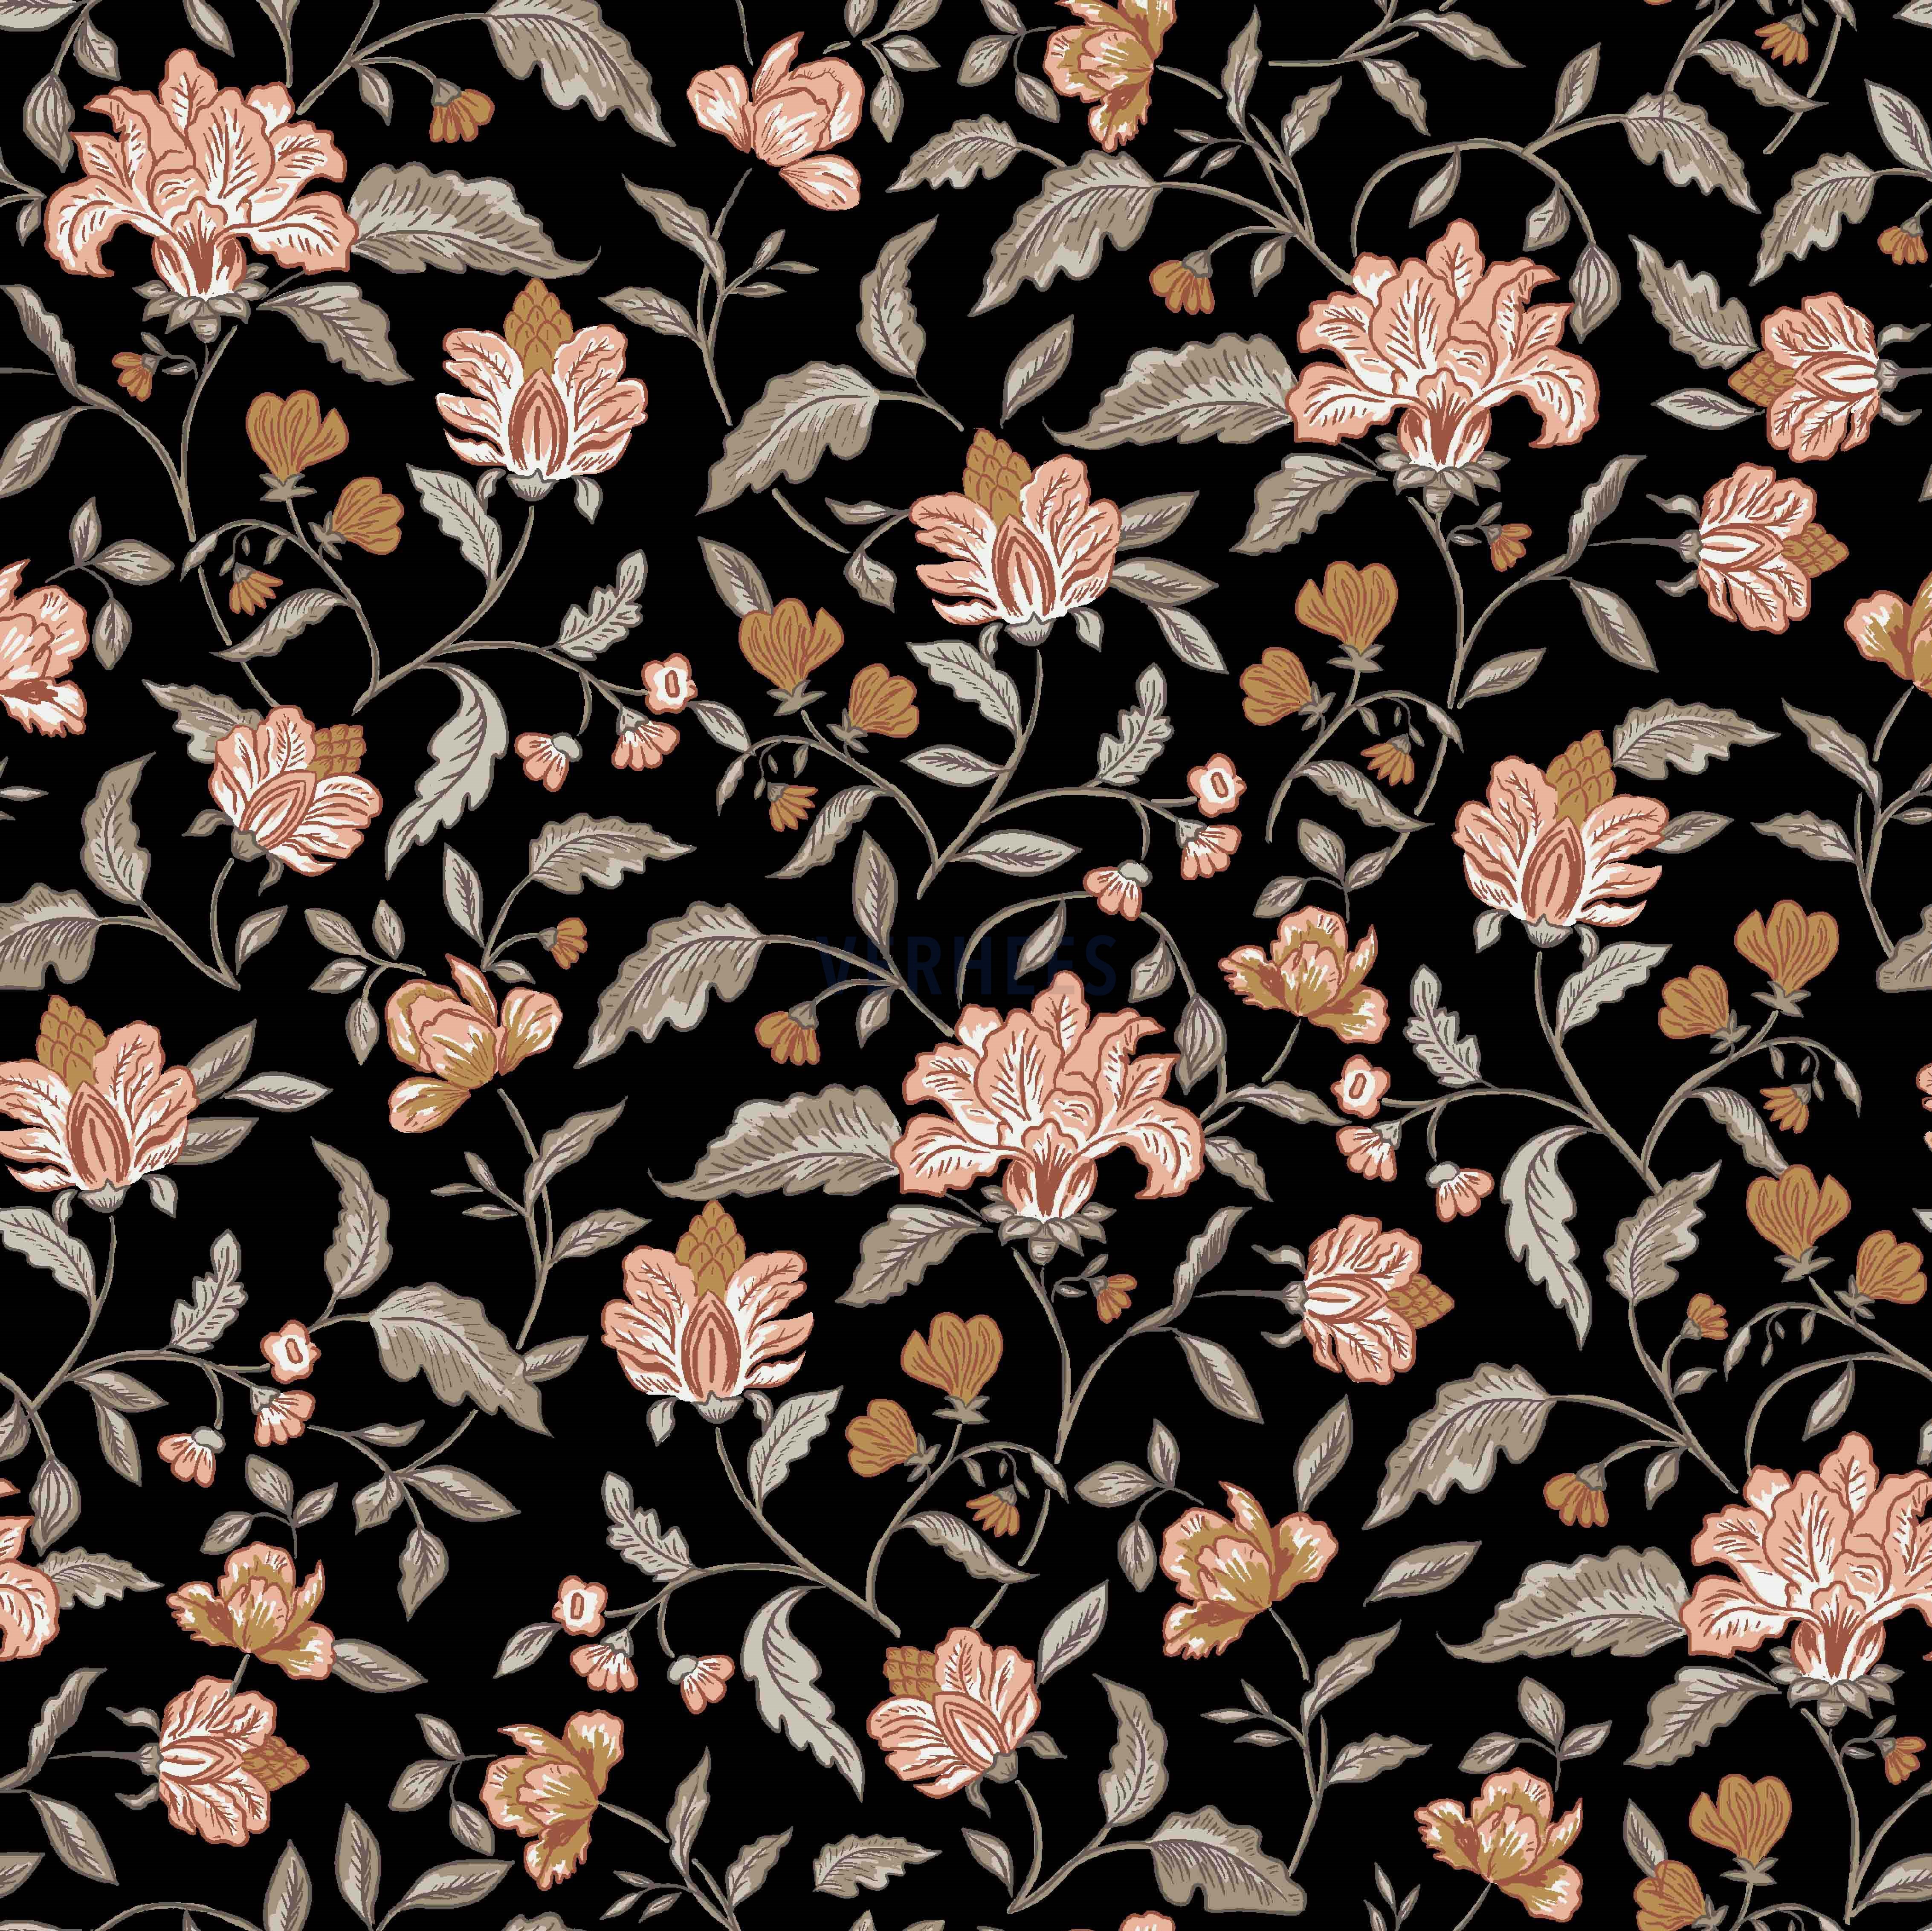 BAMBOO COTTON JERSEY FLOWERS BLACK (high resolution)